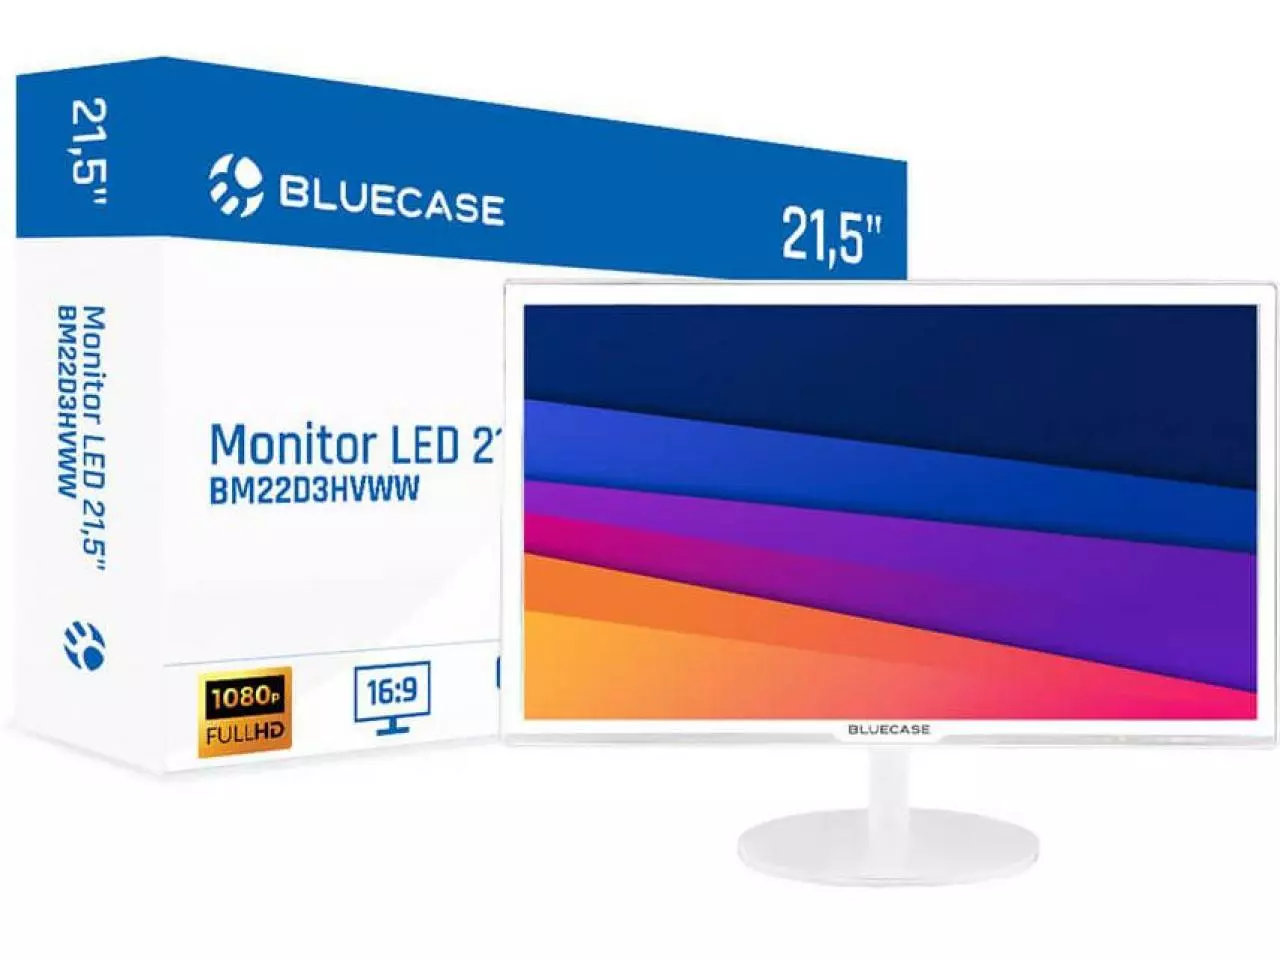 Monitor LCD BenQ 15.6 widescreen G610HDA 1366 X 768 16:9 500:1 -  9HL06LAT8L/N18A/BQ8L